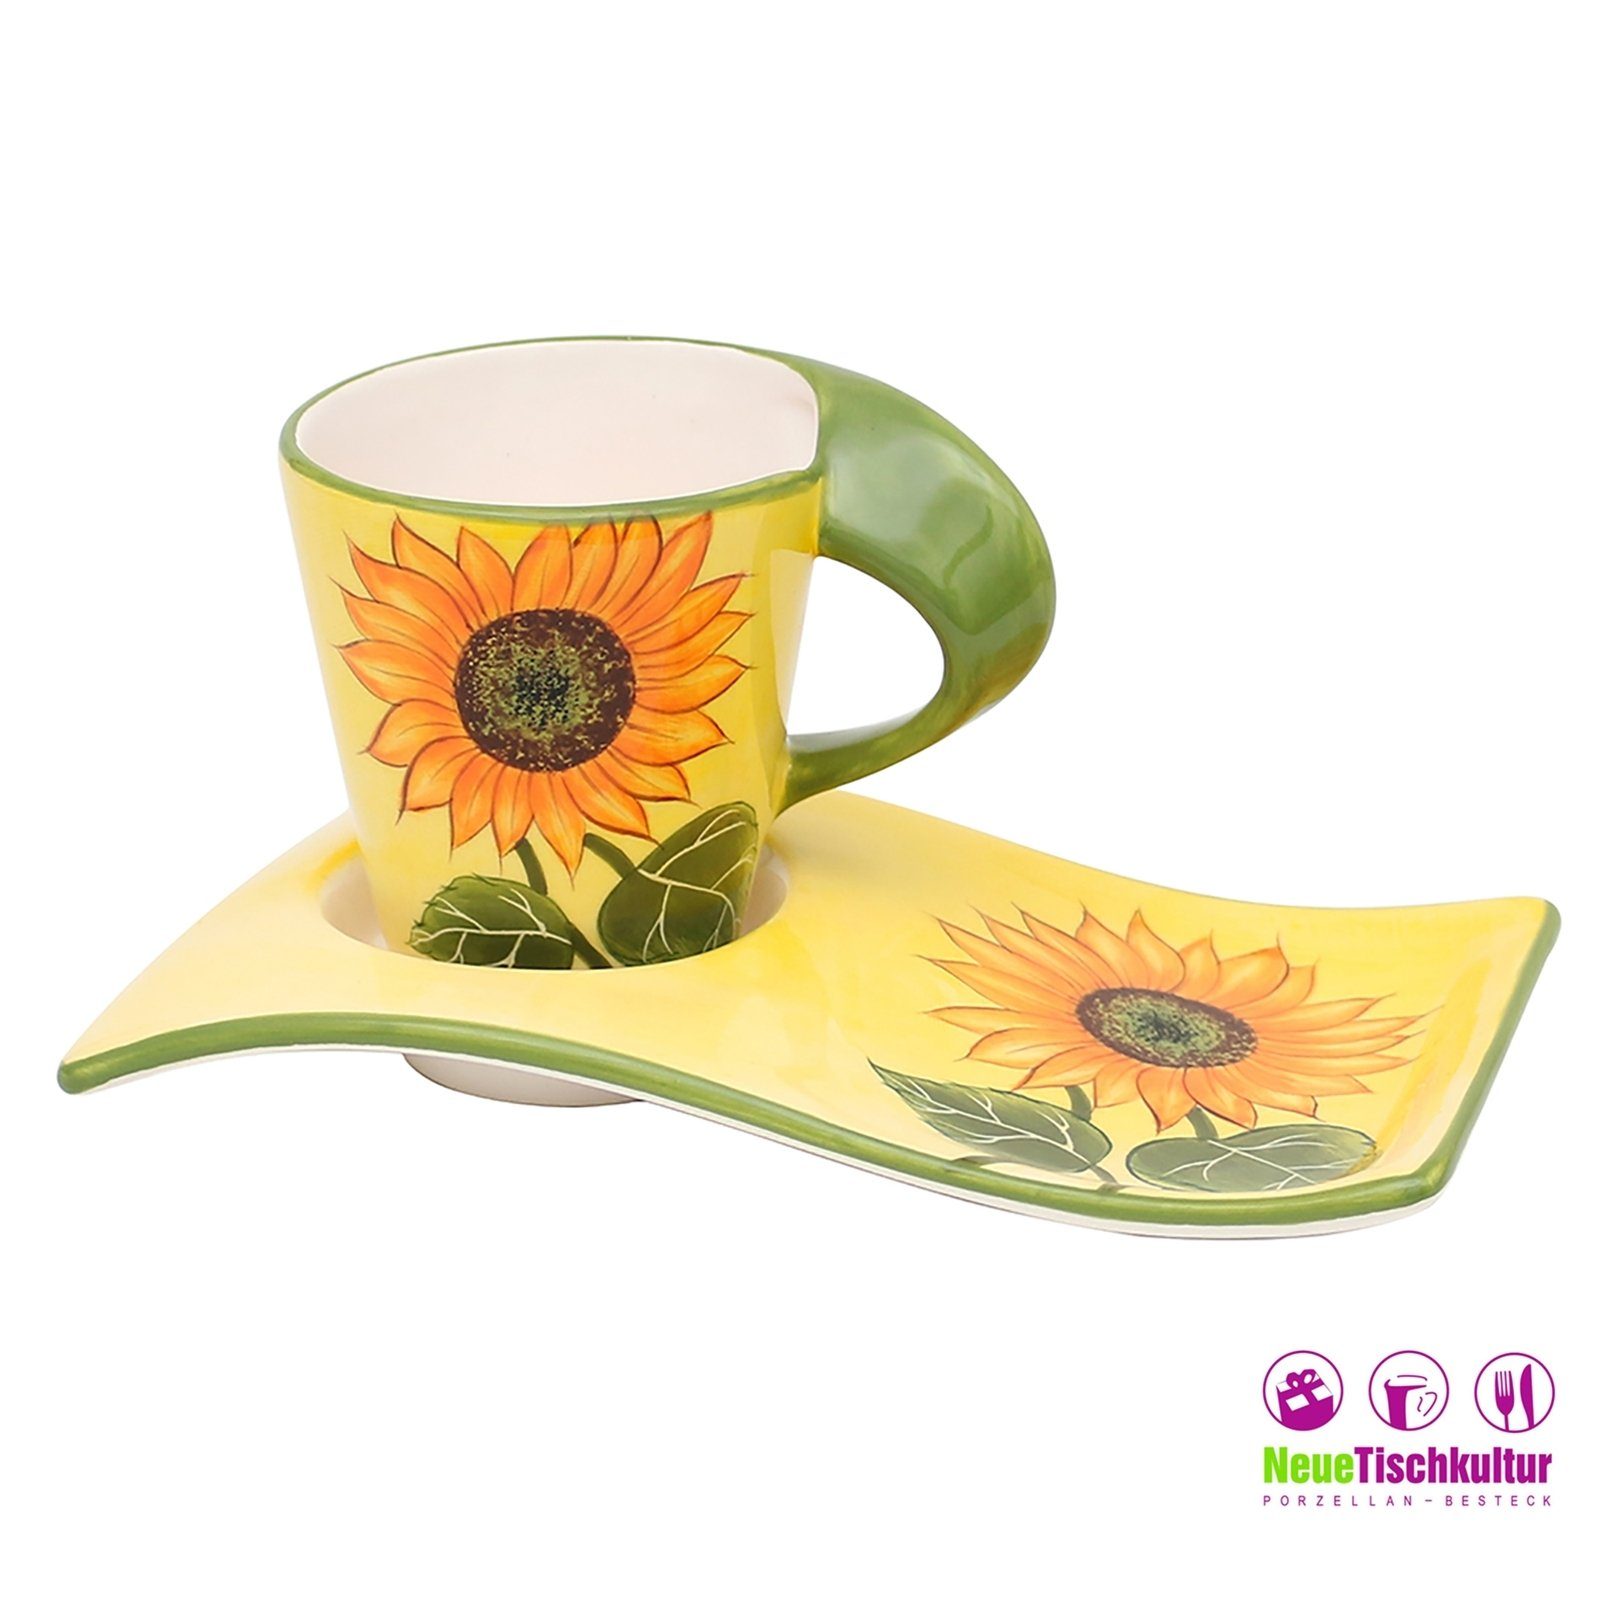 Neuetischkultur Tasse Keramik Unterteller, Kaffeetasse modern mit Sonnenblume